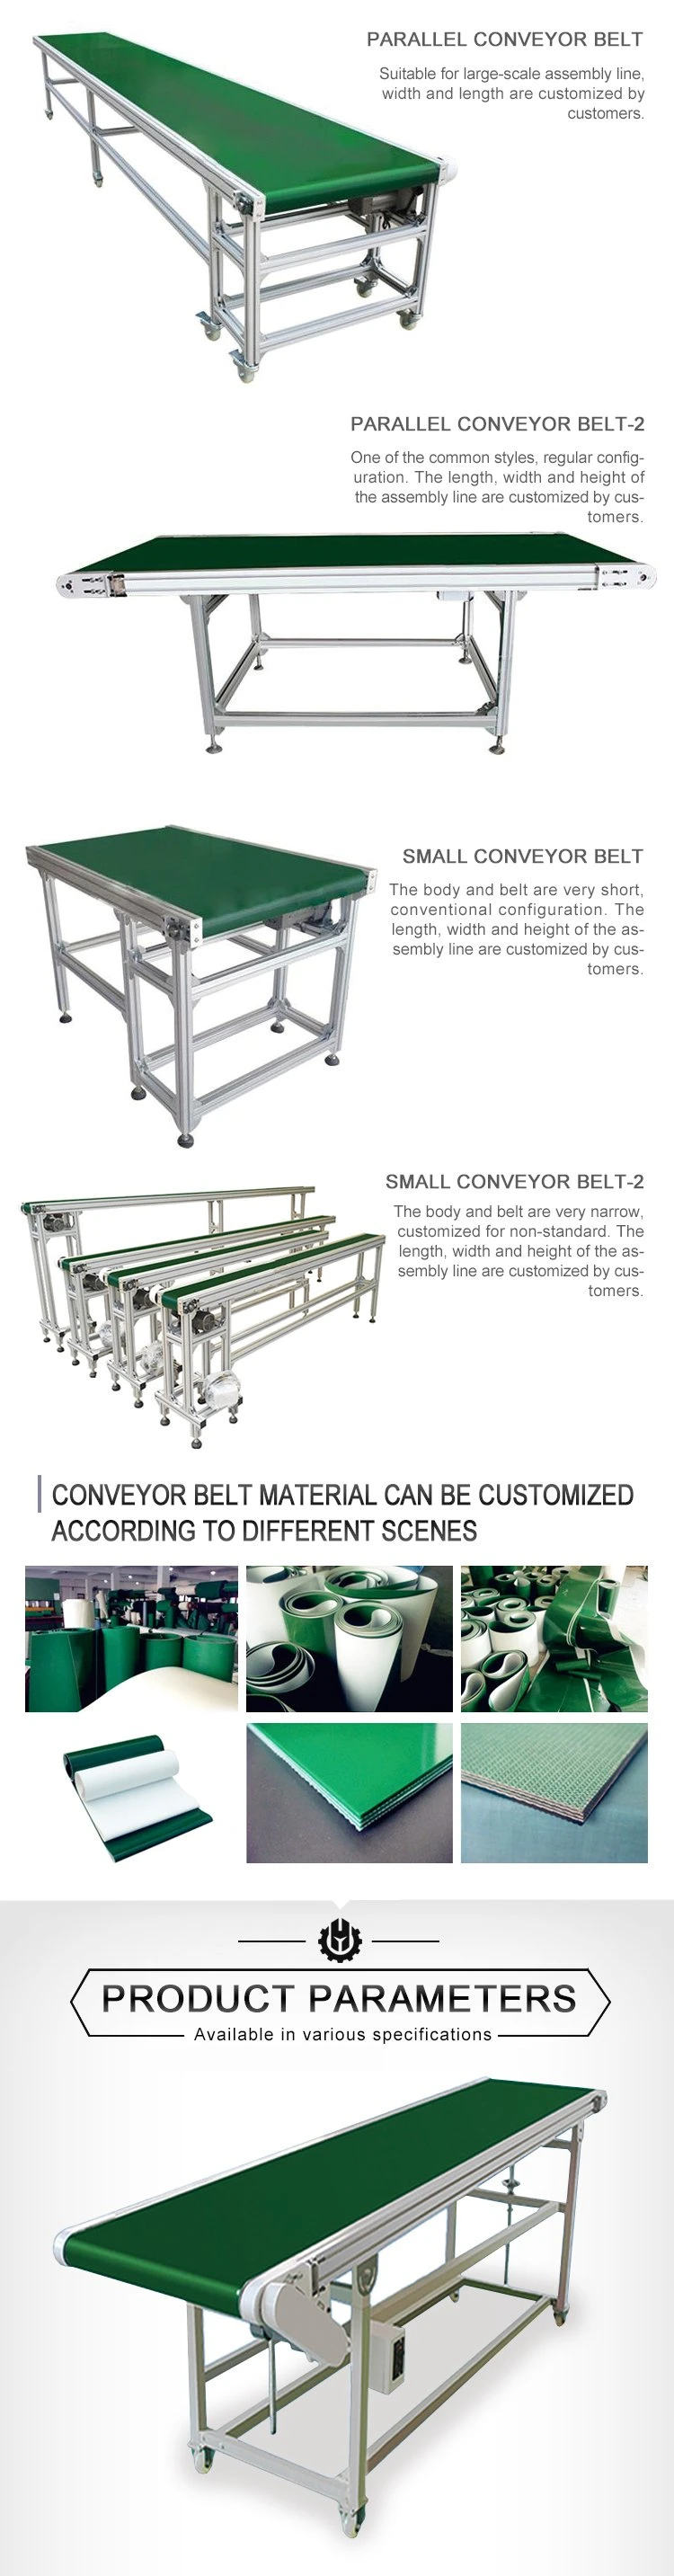 Hot Sale B800 Large Belt Conveyor PVC Flat Belt Conveyor with Power